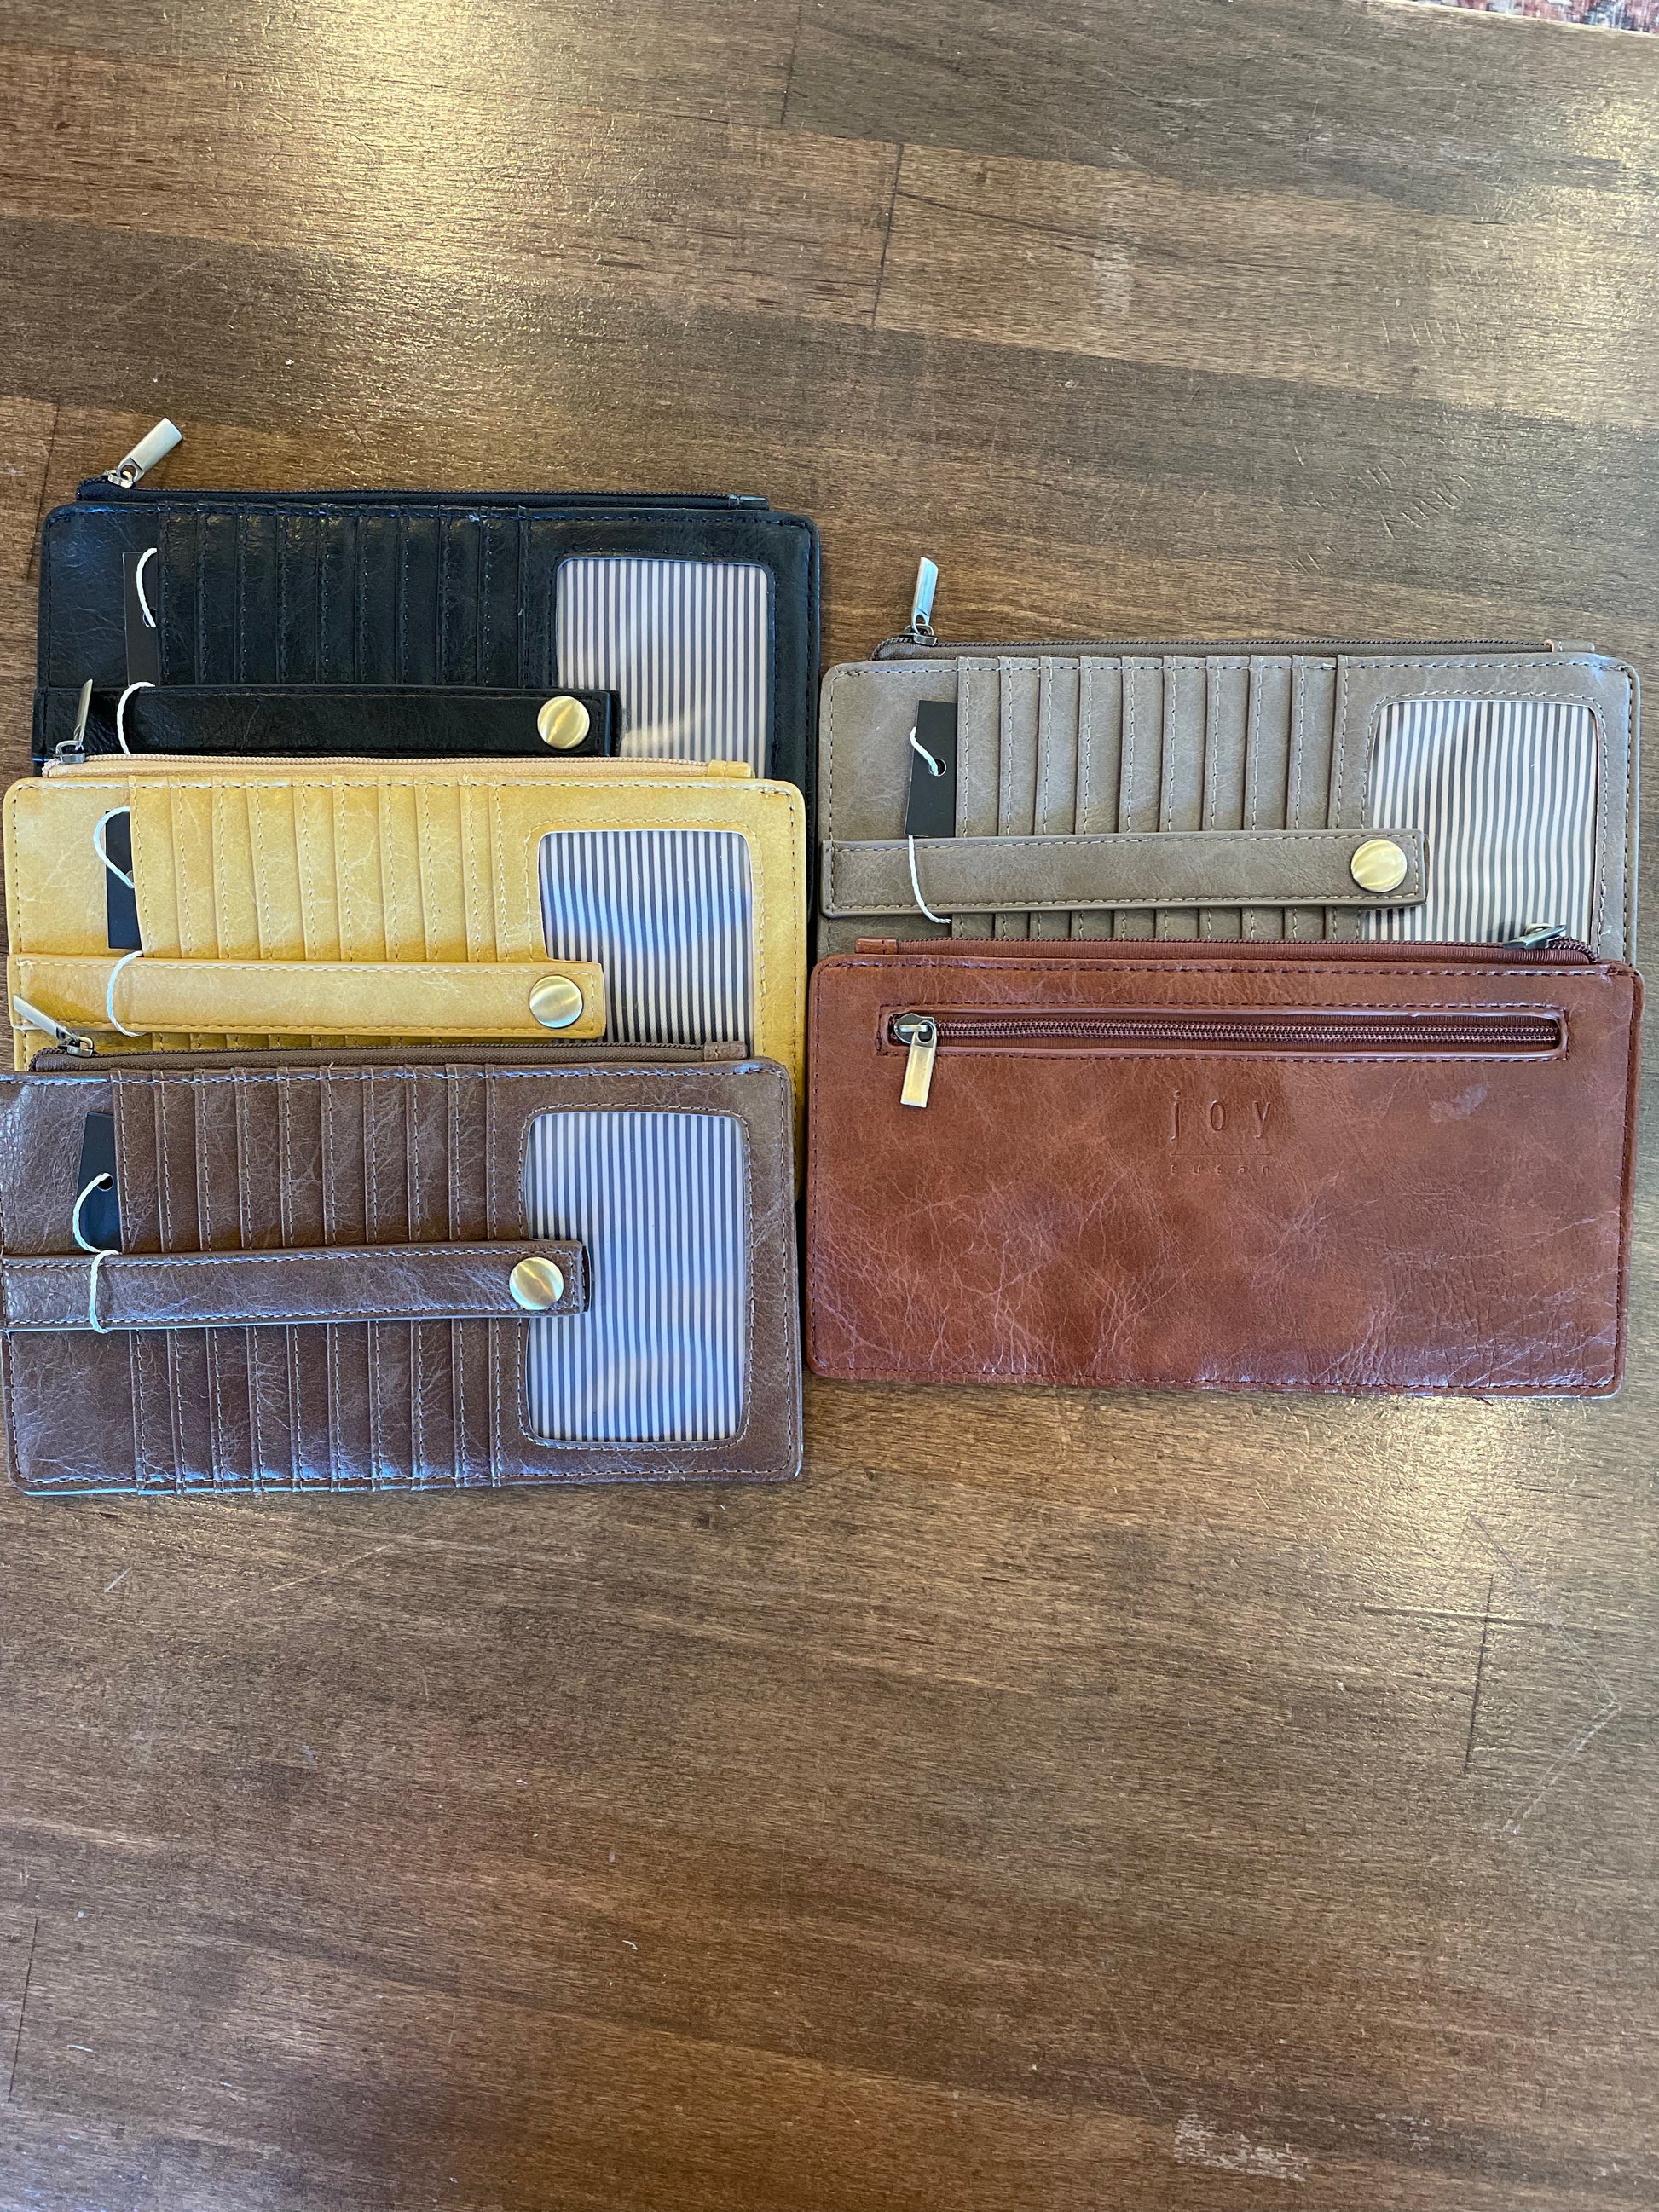 Joy Susan Kara Mini Wallet